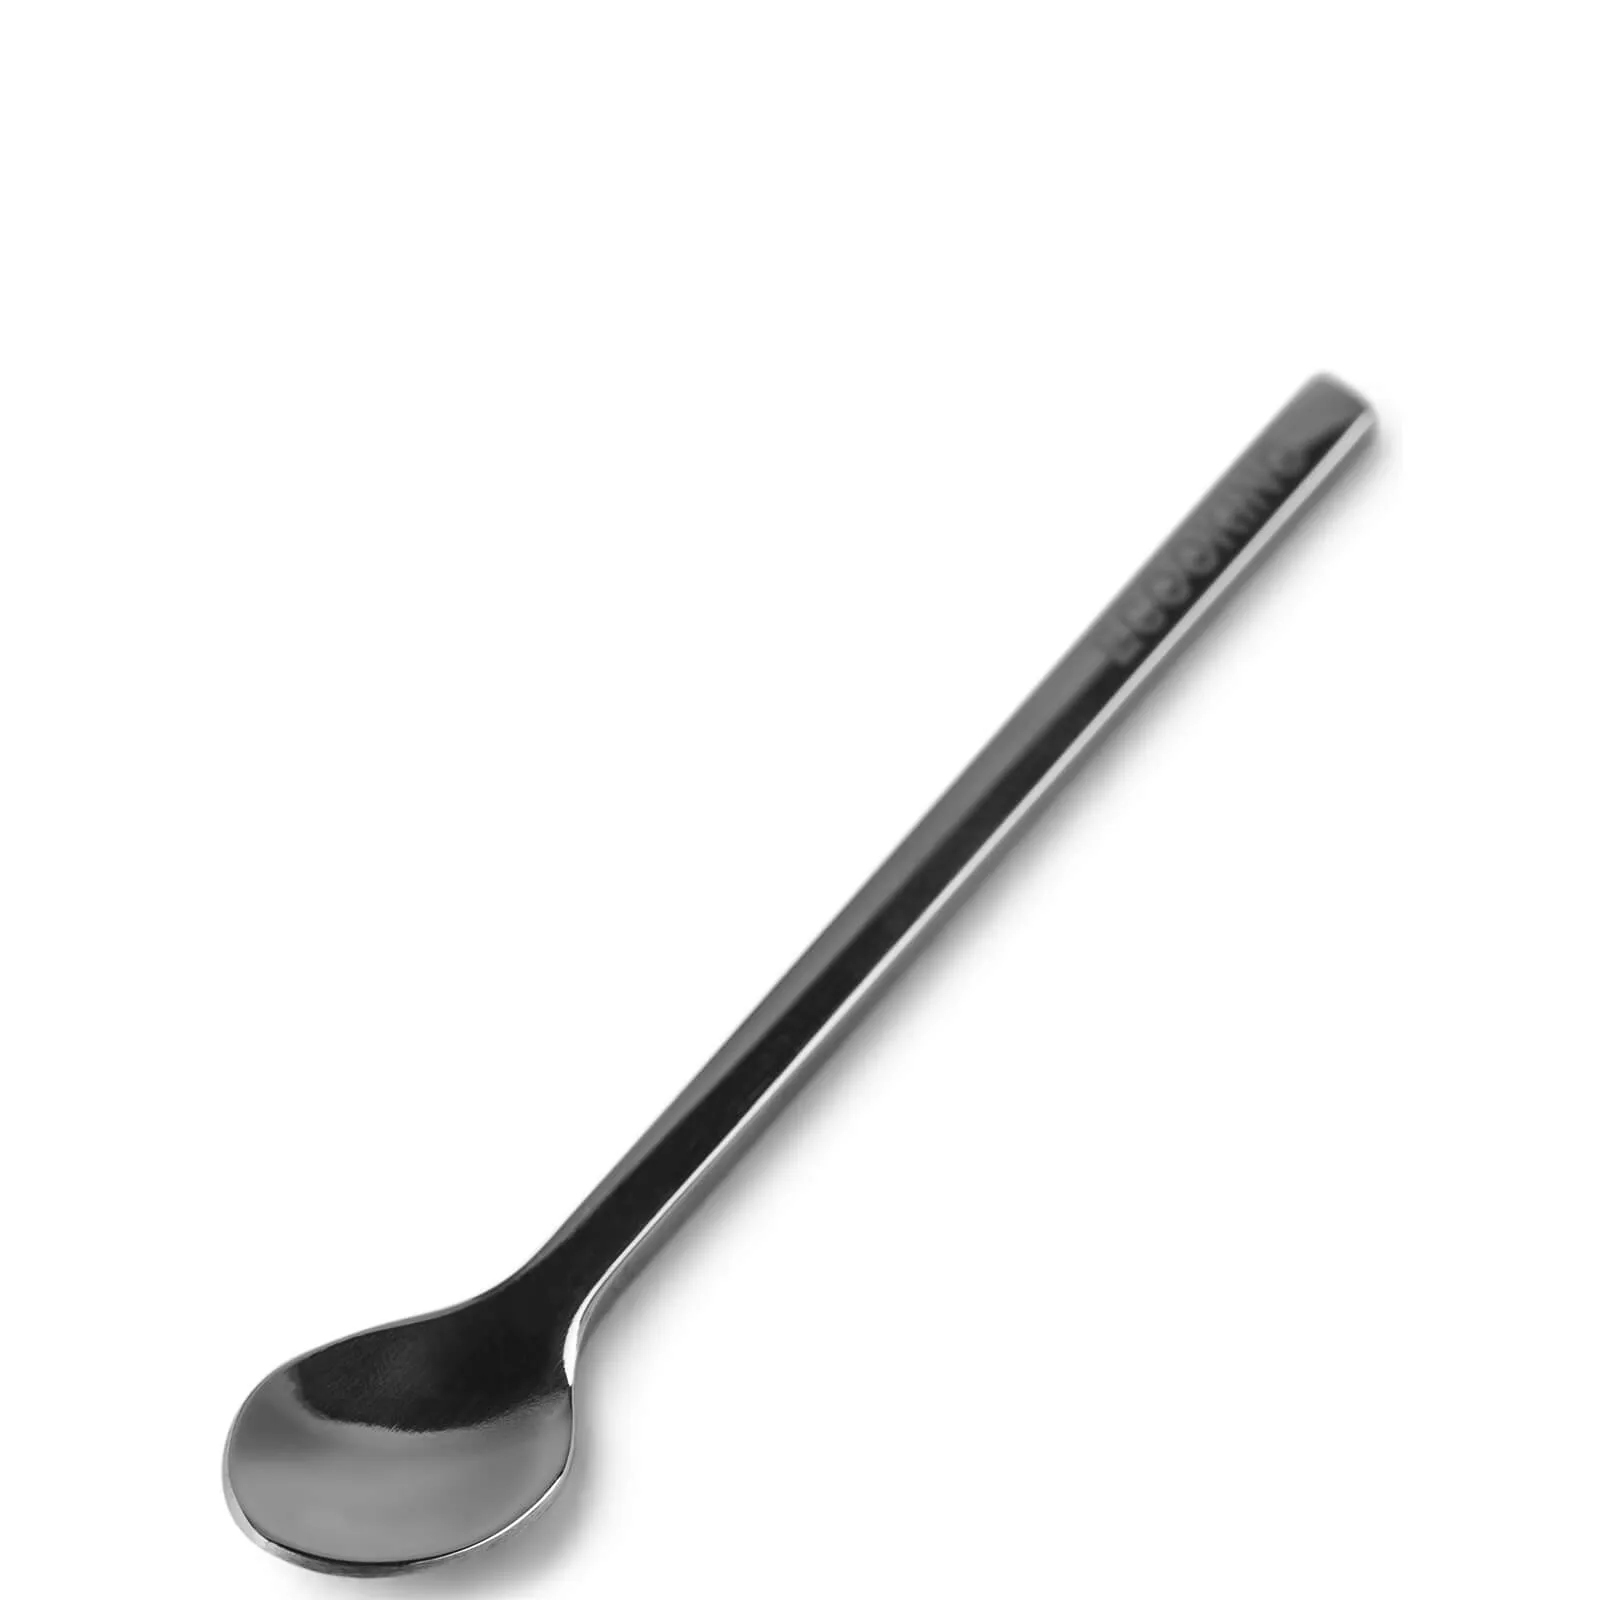  Spoon